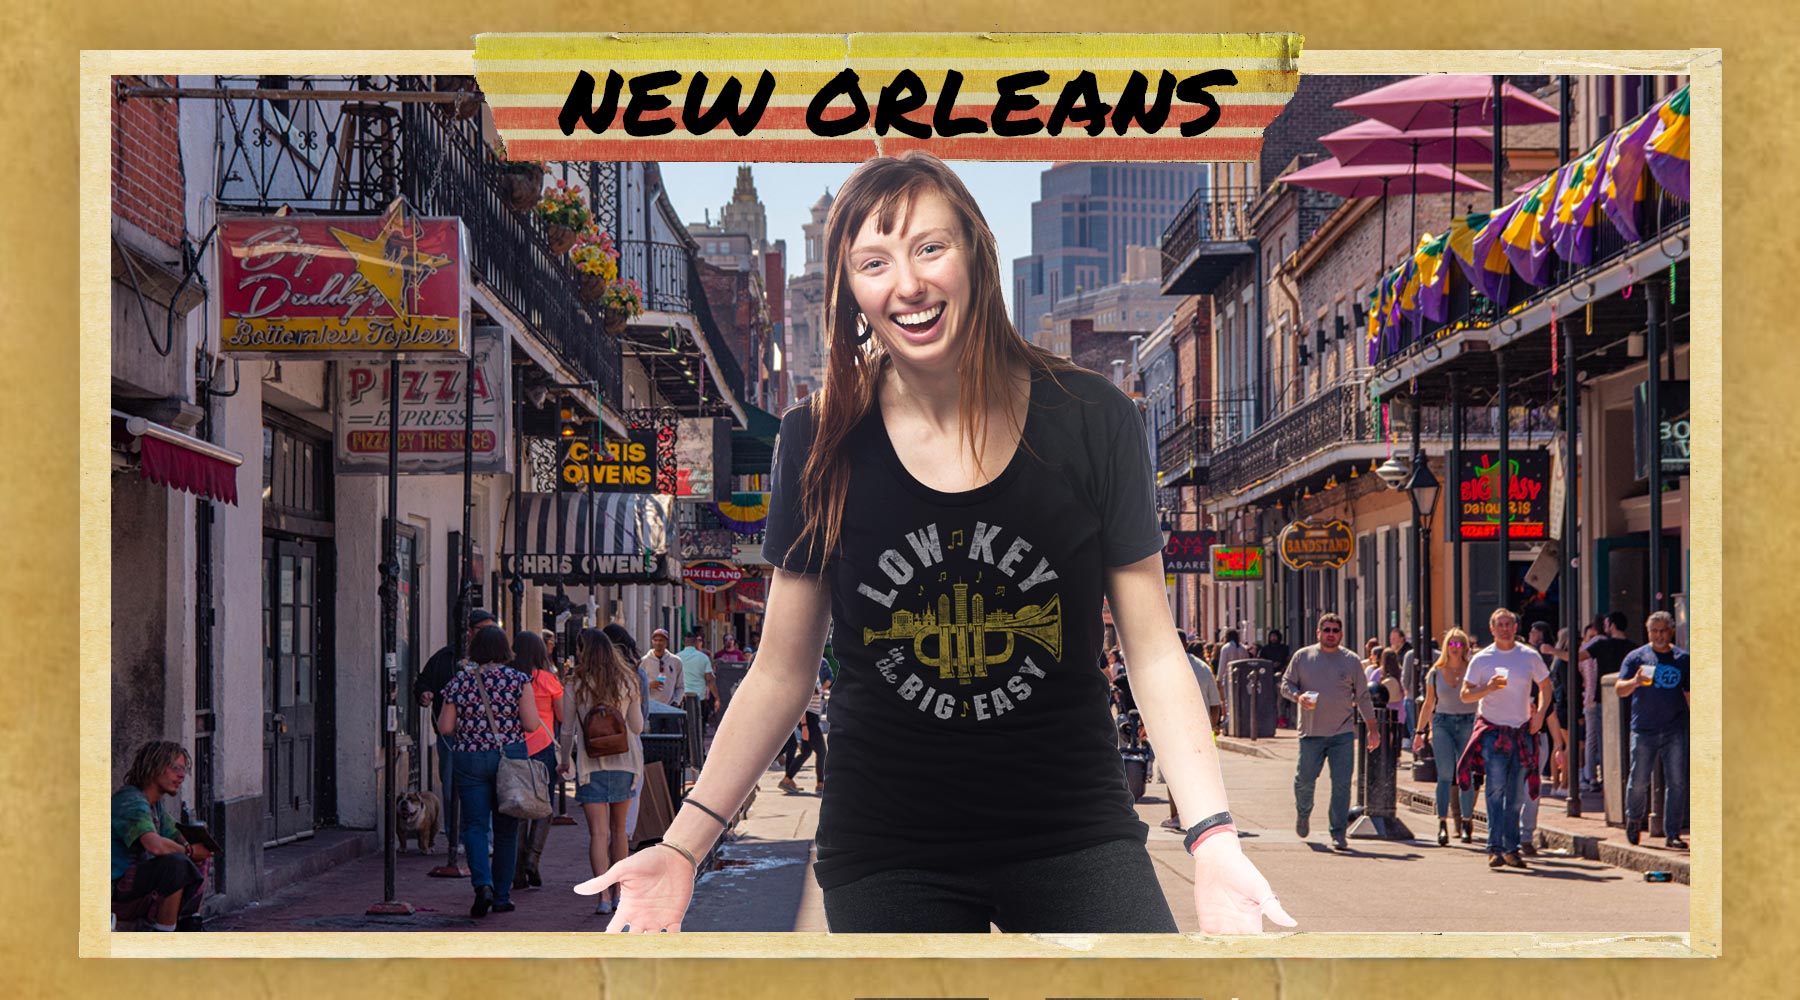 New Orleans T-shirts & Mardi Gras Tees